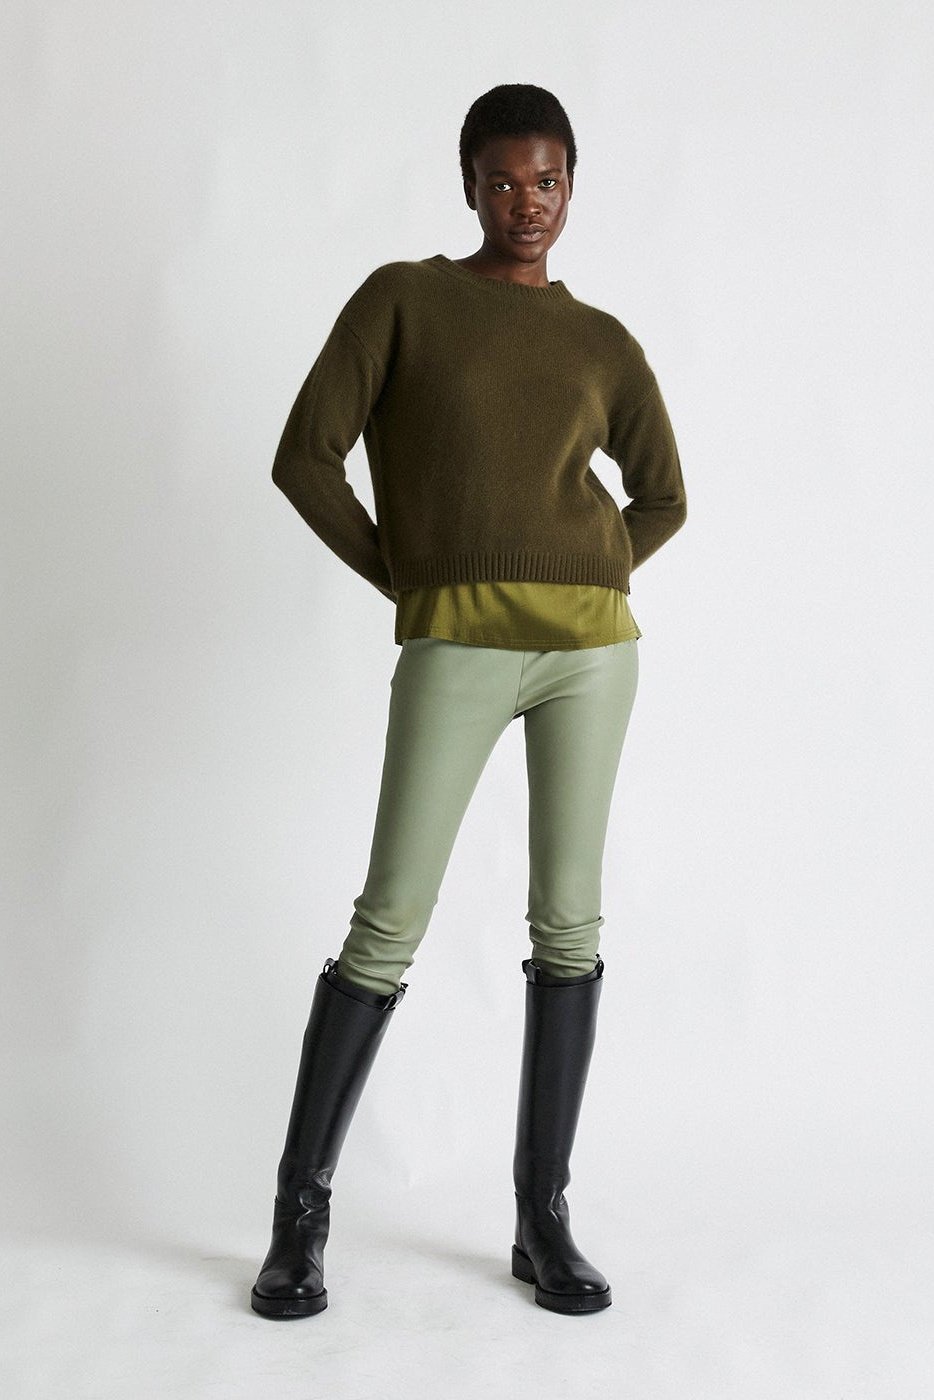 + Beryll Holly Cashmere Sweater | Kelp Green - +Beryll Holly Cashmere Sweater | Kelp Green - +Beryll Worn By Good People